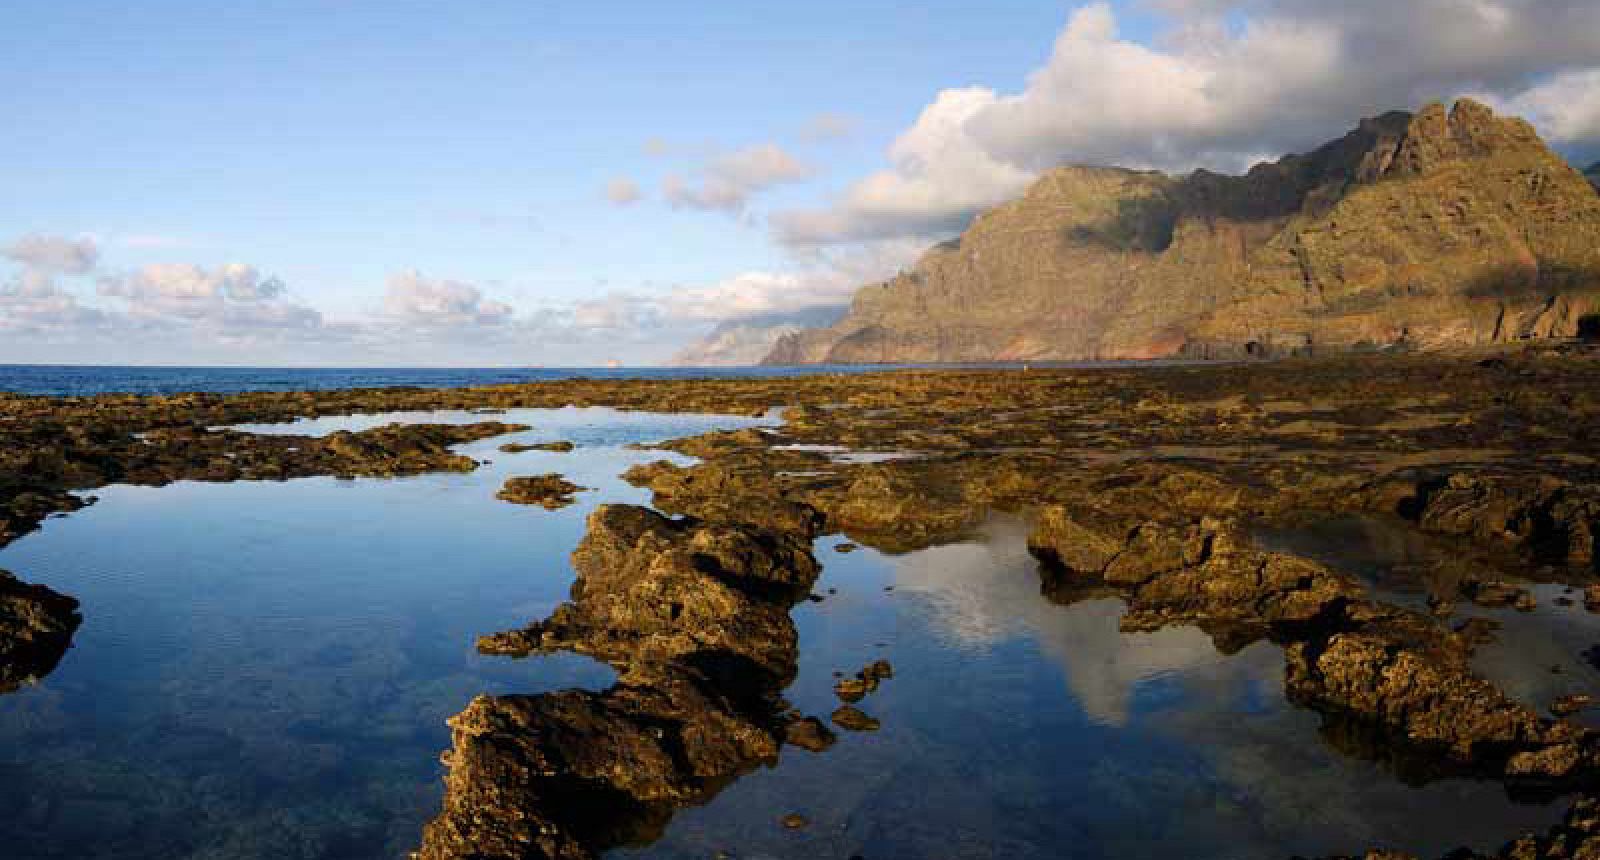 La reserva de la biosfera del Macizo de Anaga en Tenerife.